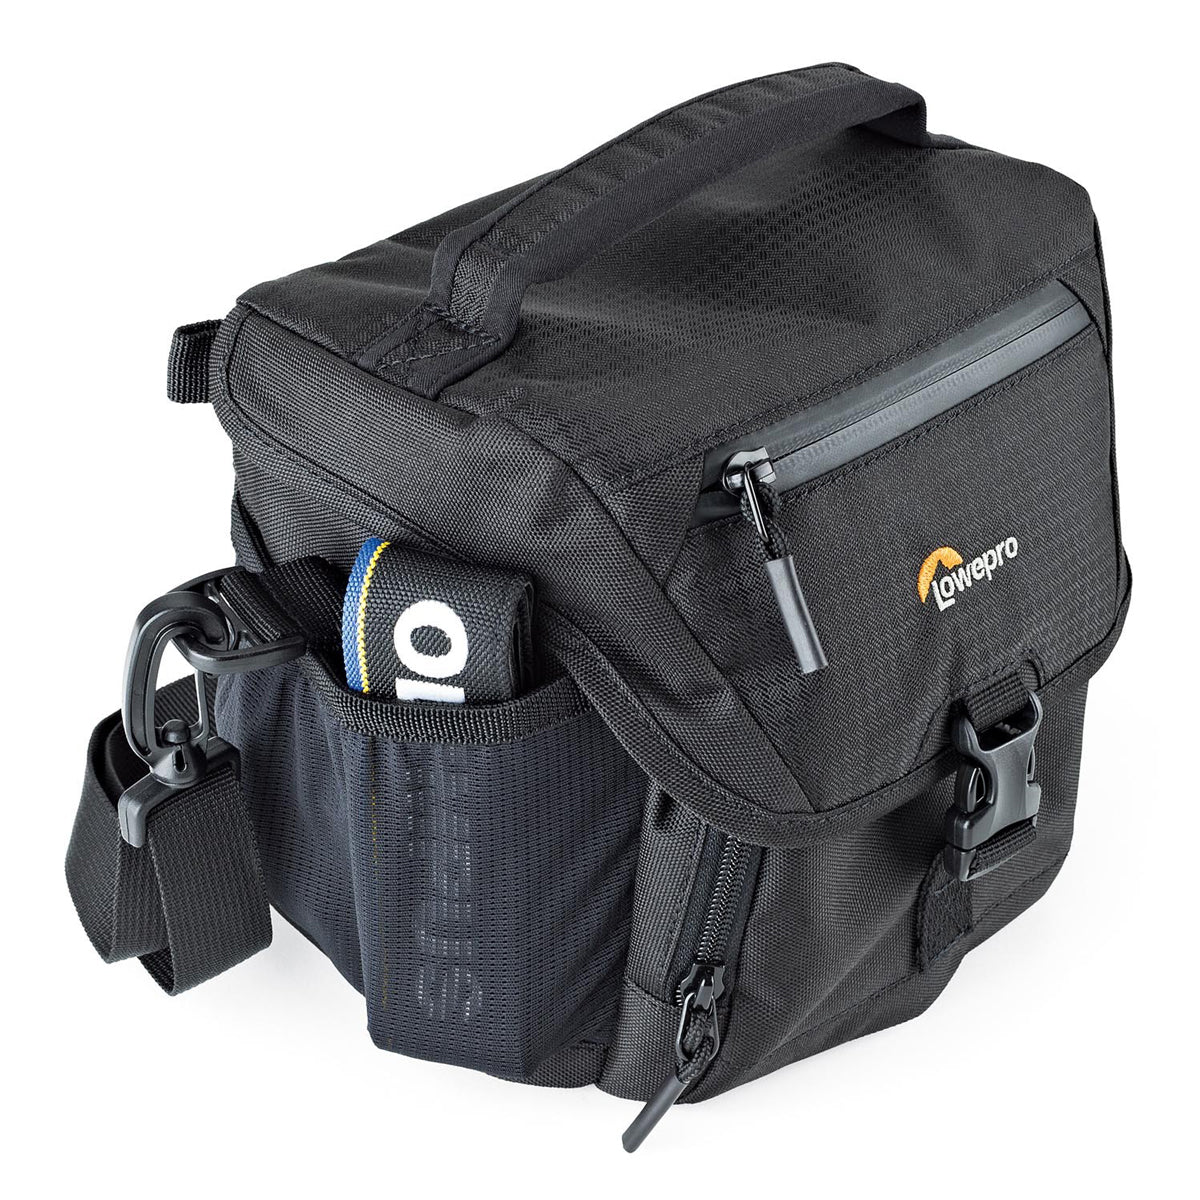 Lowepro Nova SH 140 AW II Camera Shoulder Bag (Black)